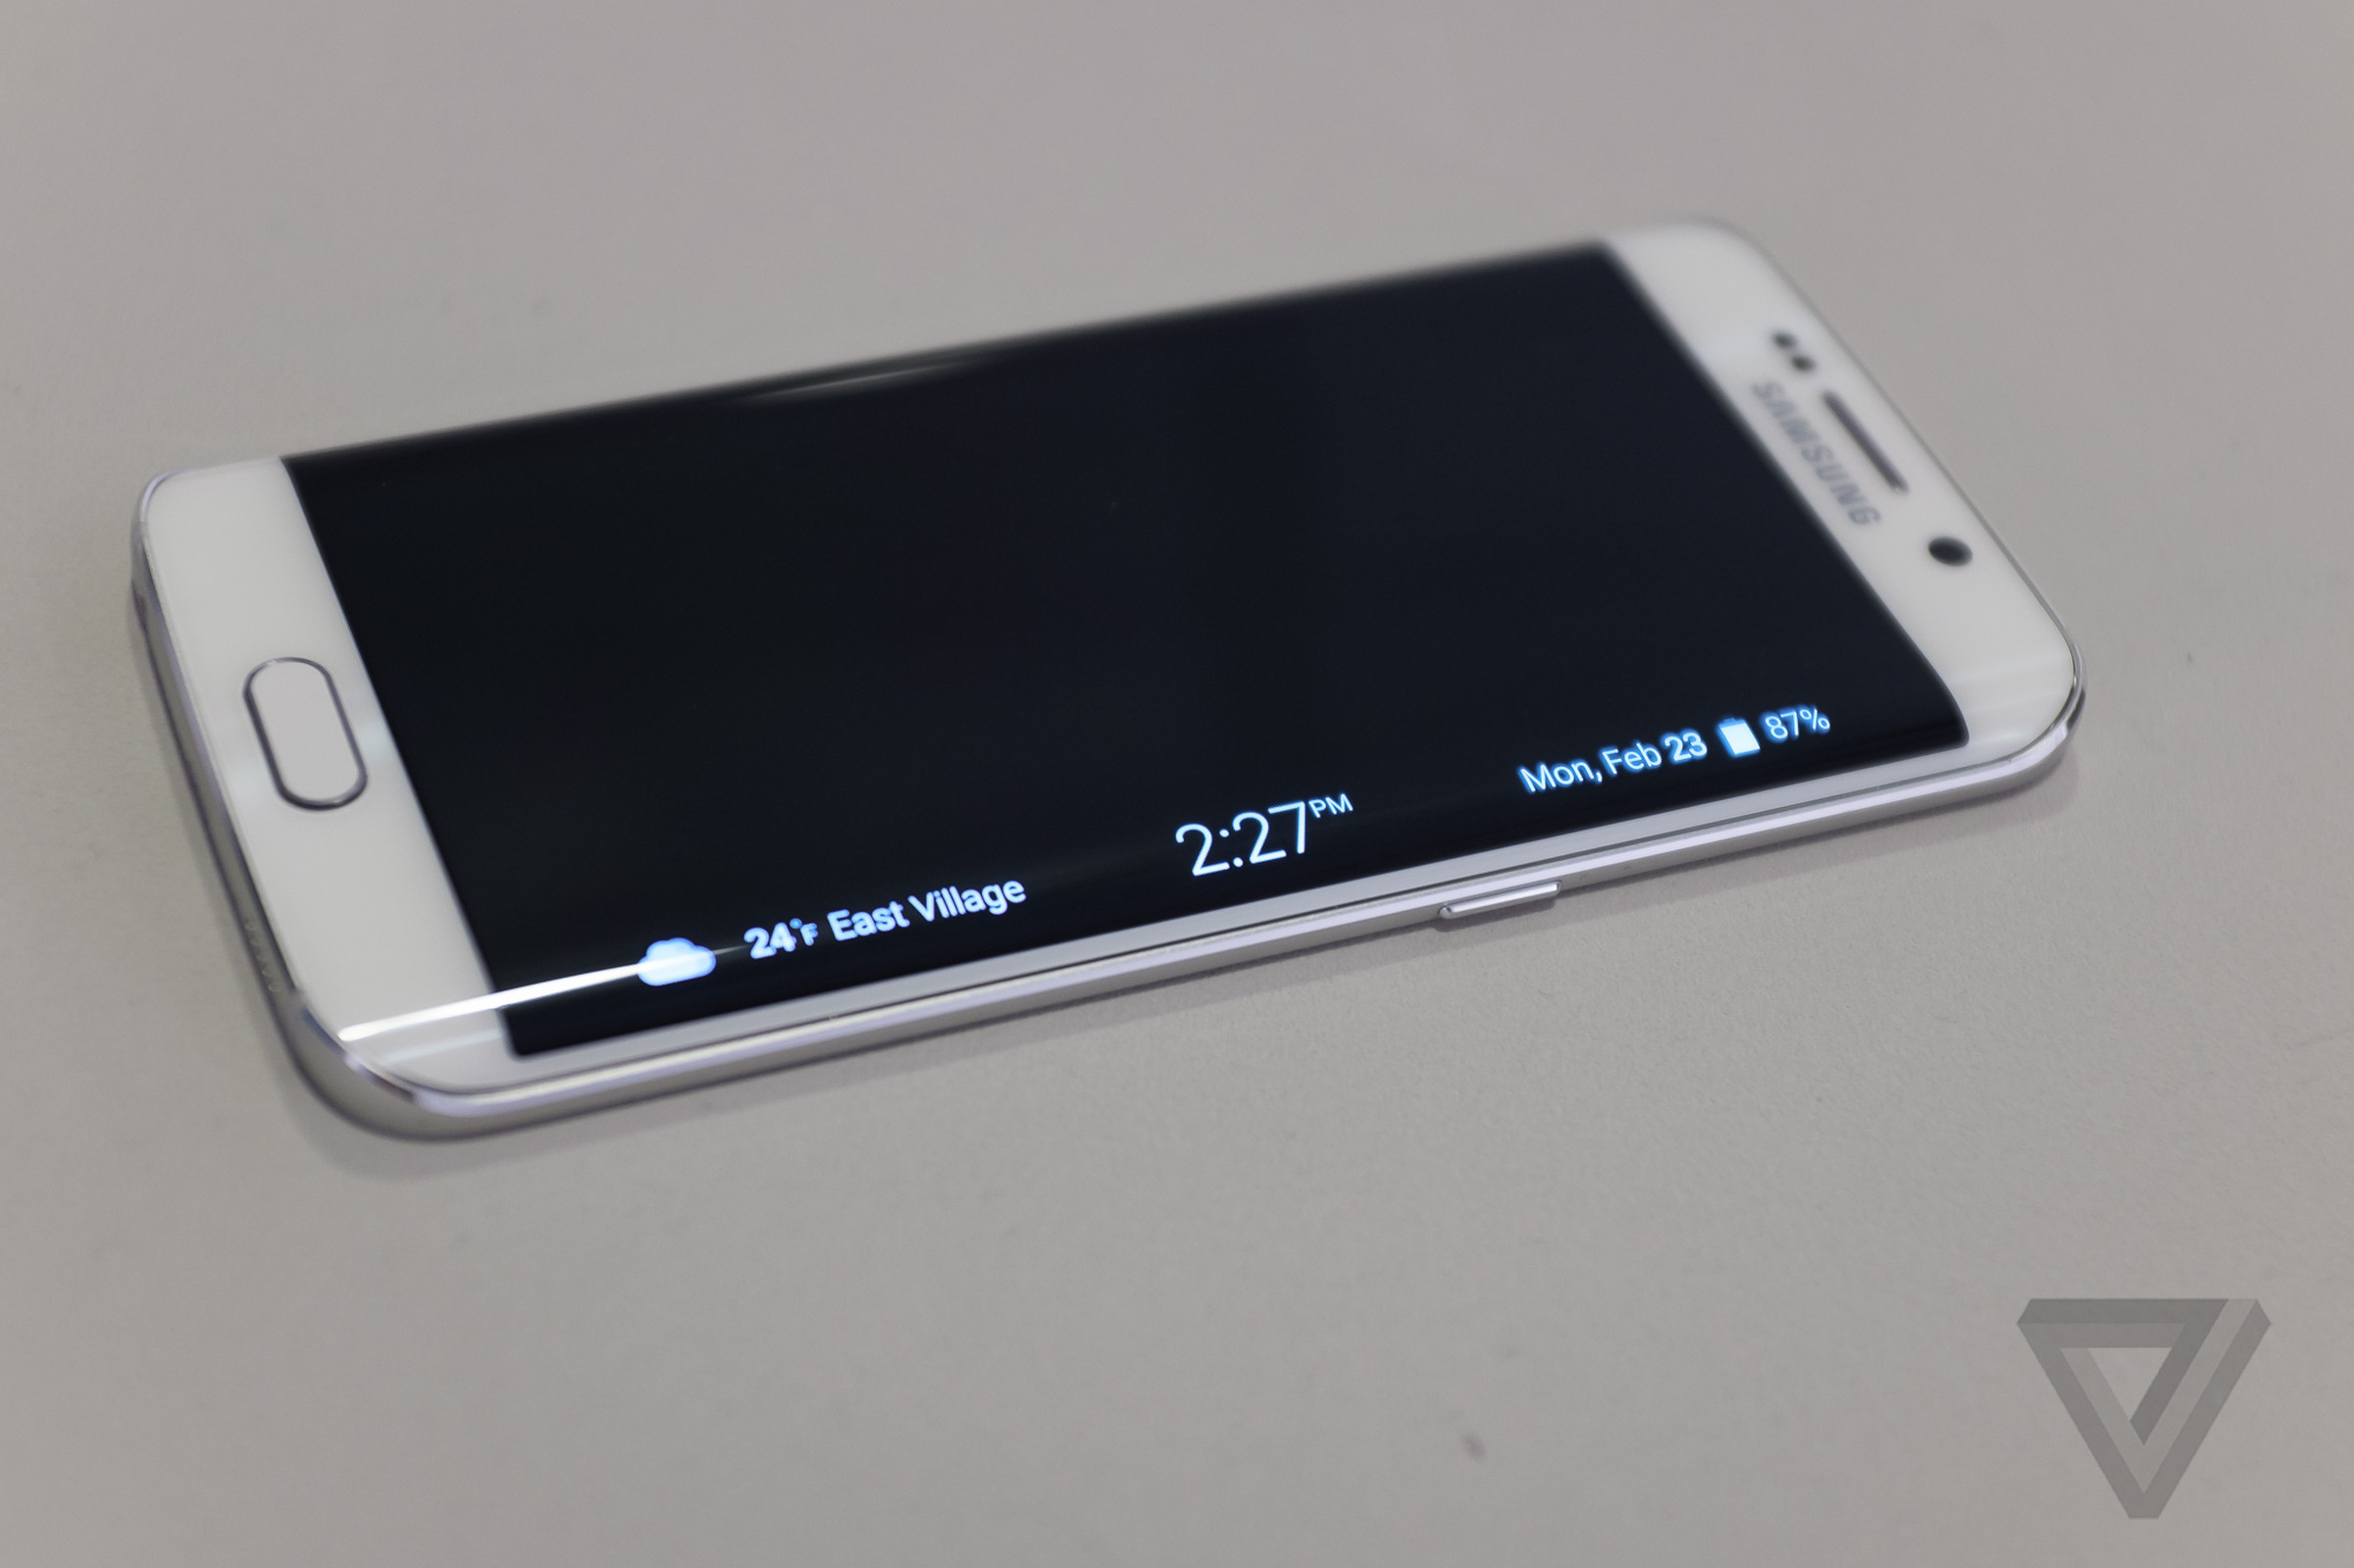 Samsung Galaxy S6 and S6 Edge photos